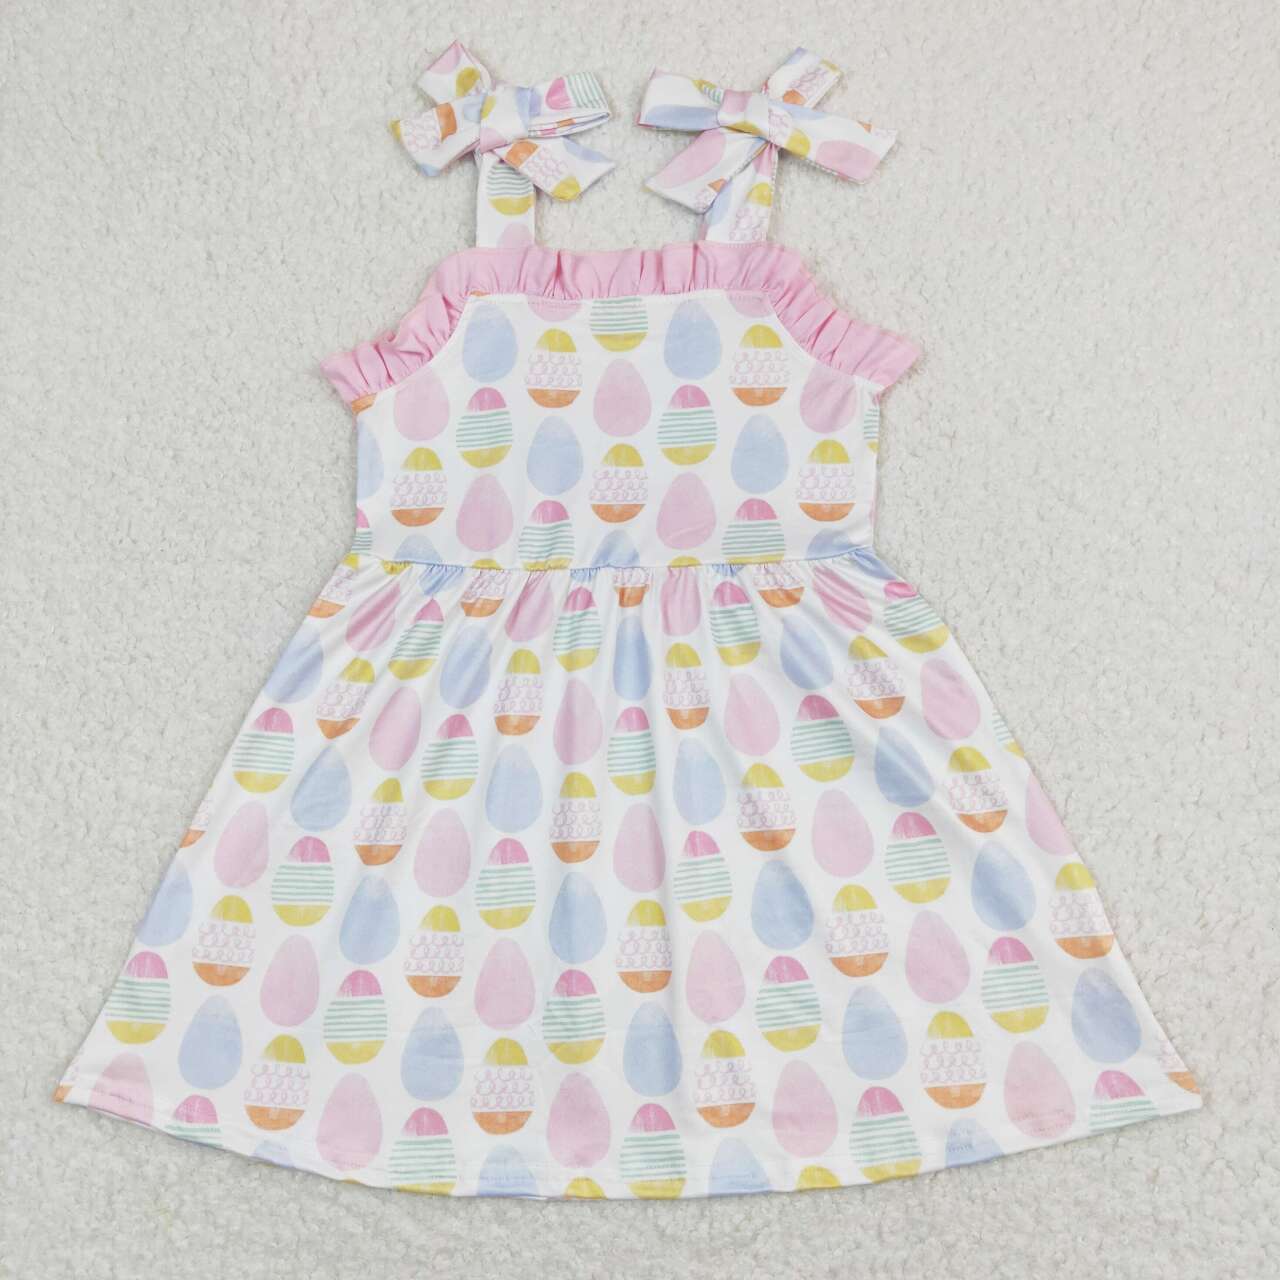 GSD0754 baby girl clothes easter eggs girl easter summer dress